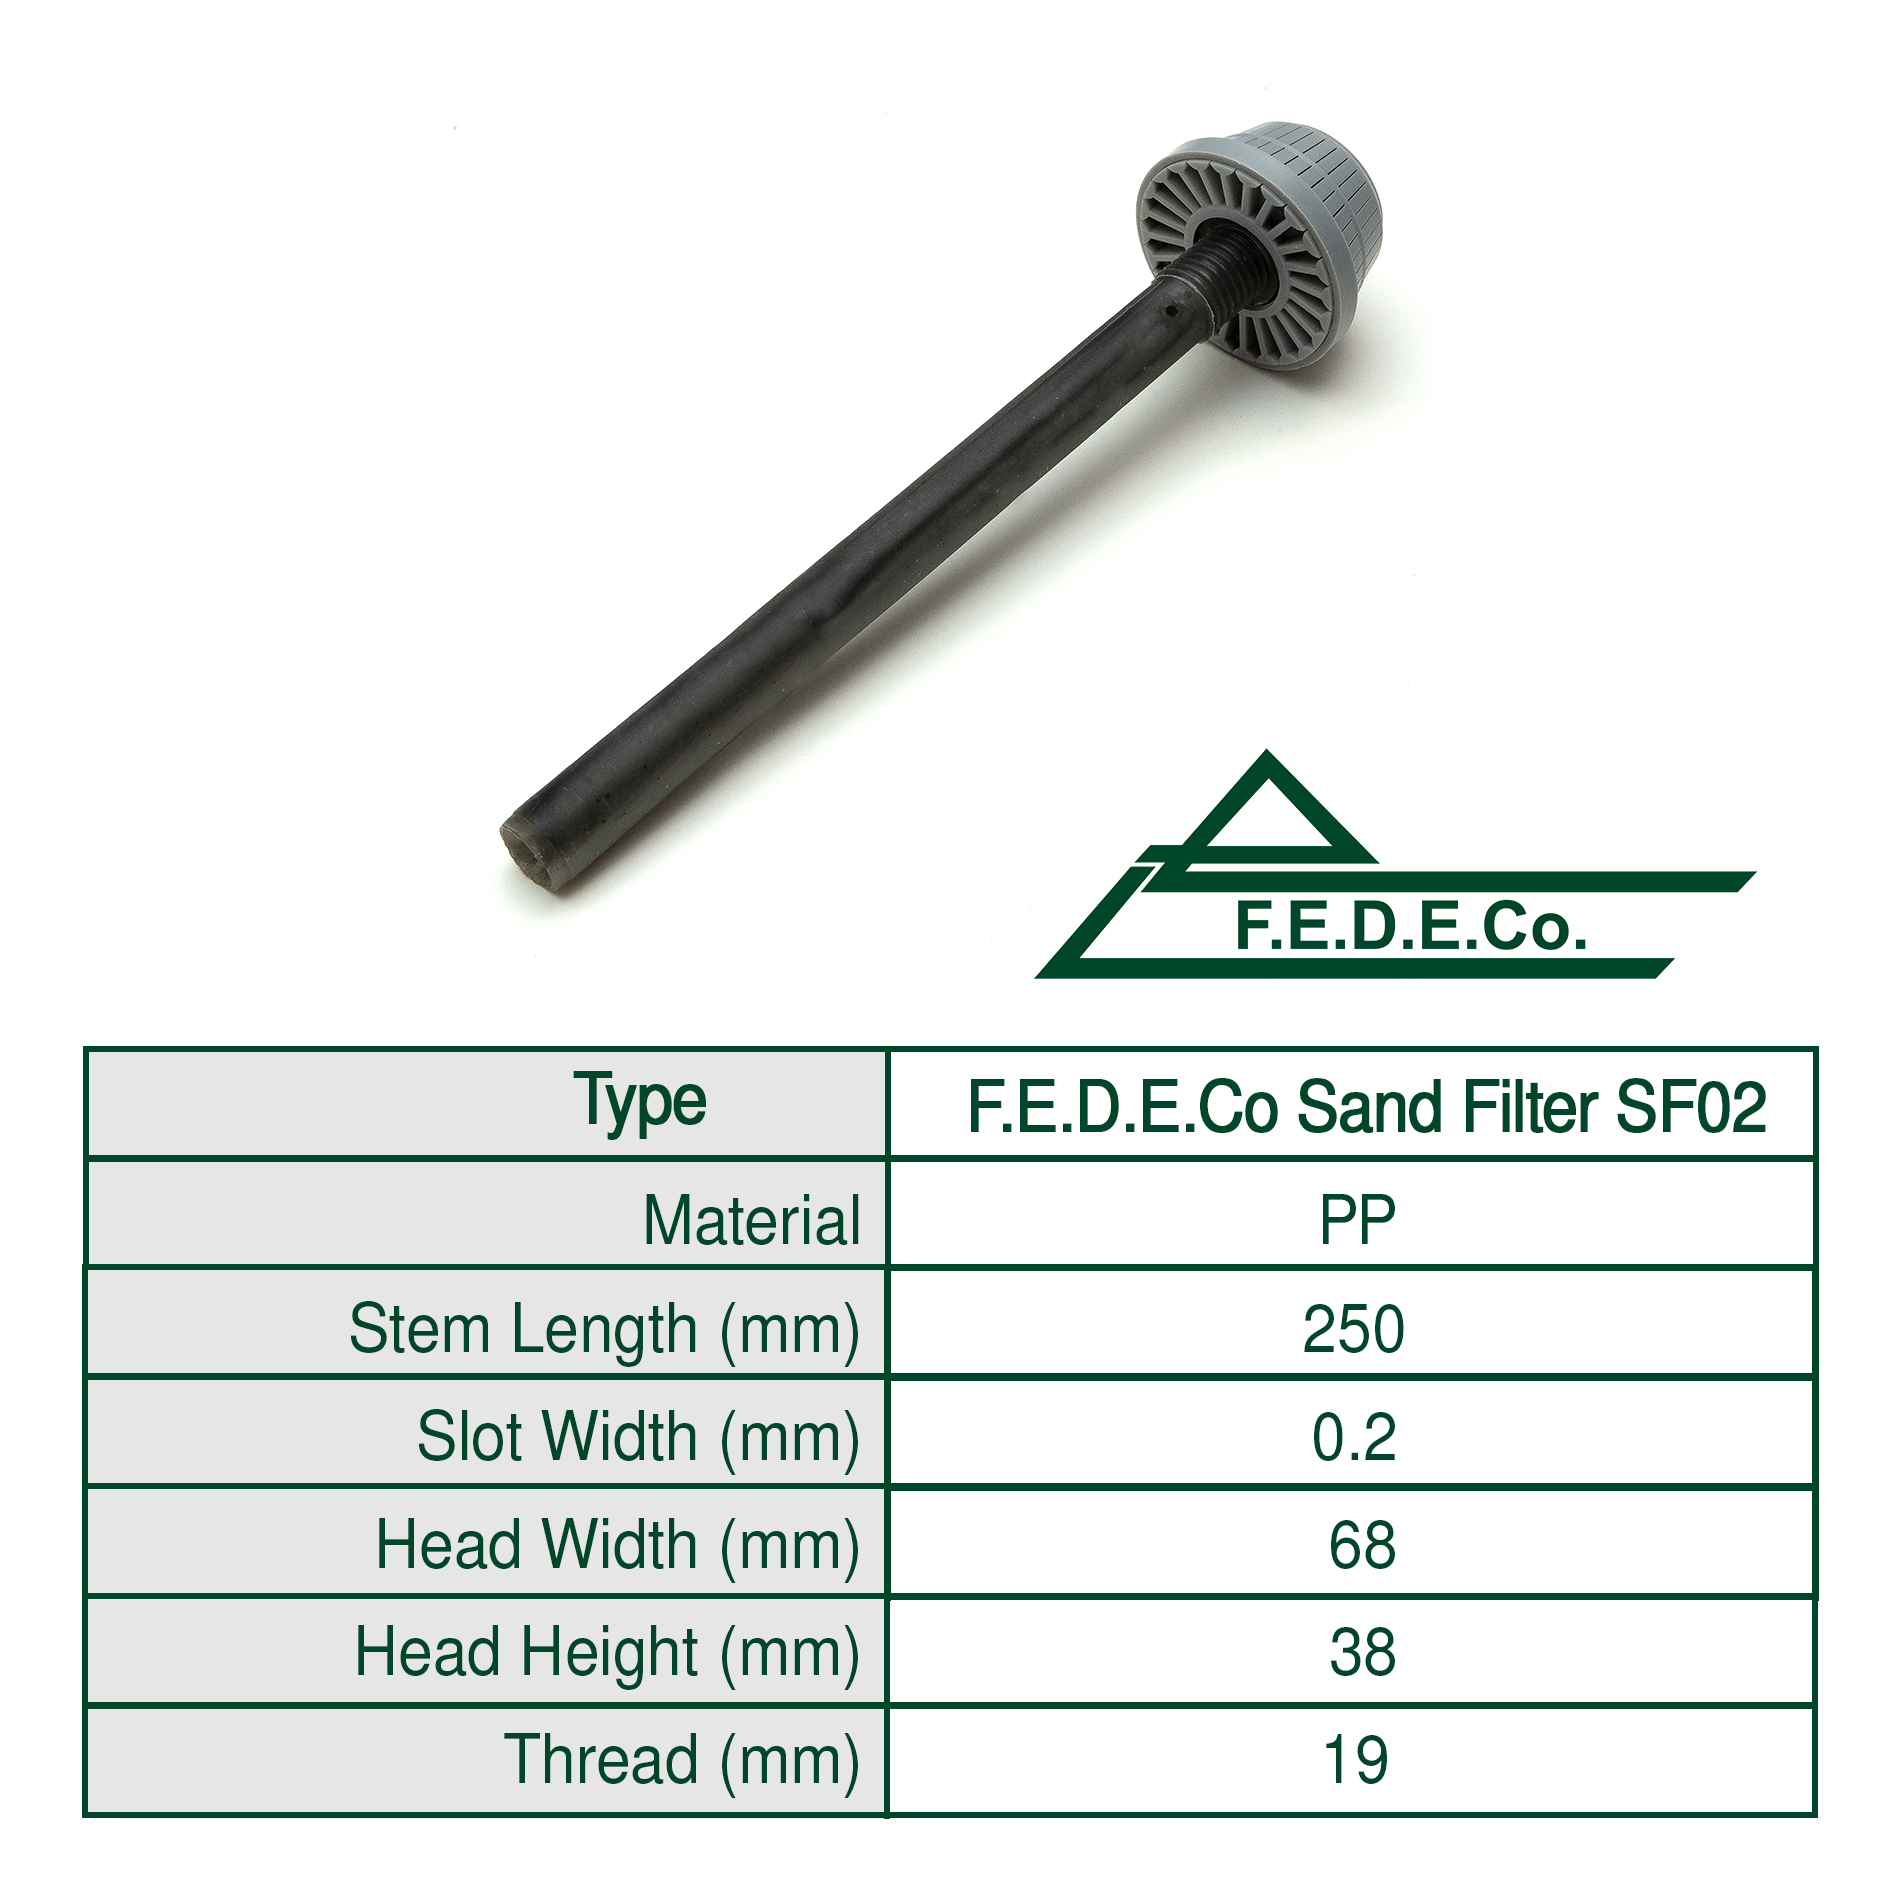 F.E.D.E.Co Sand Filter SF02